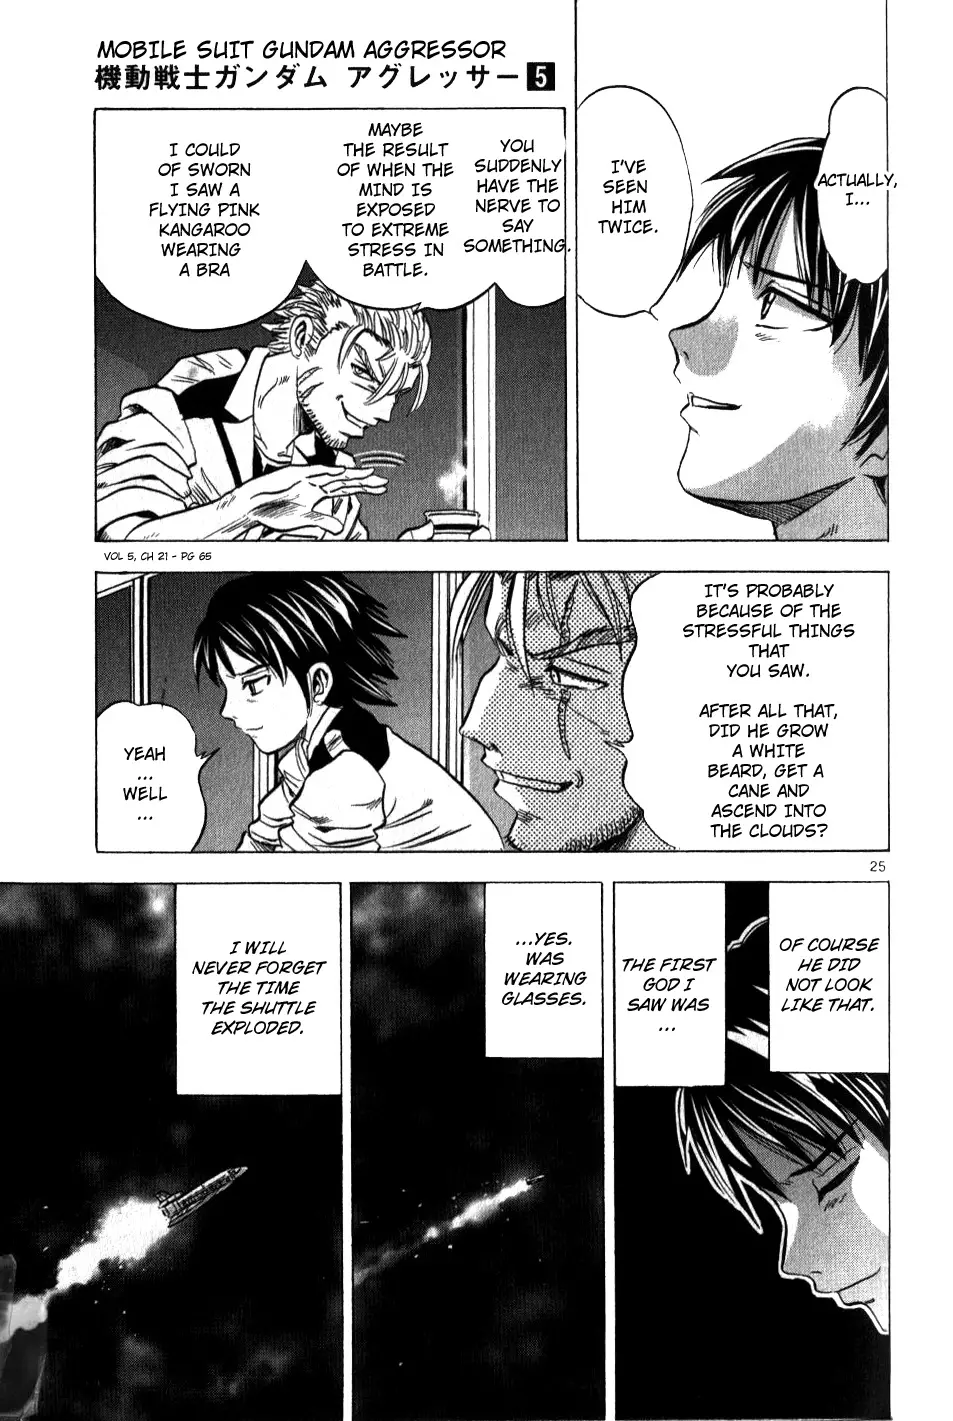 Mobile Suit Gundam Aggressor - 21 page 25-b3c9f647